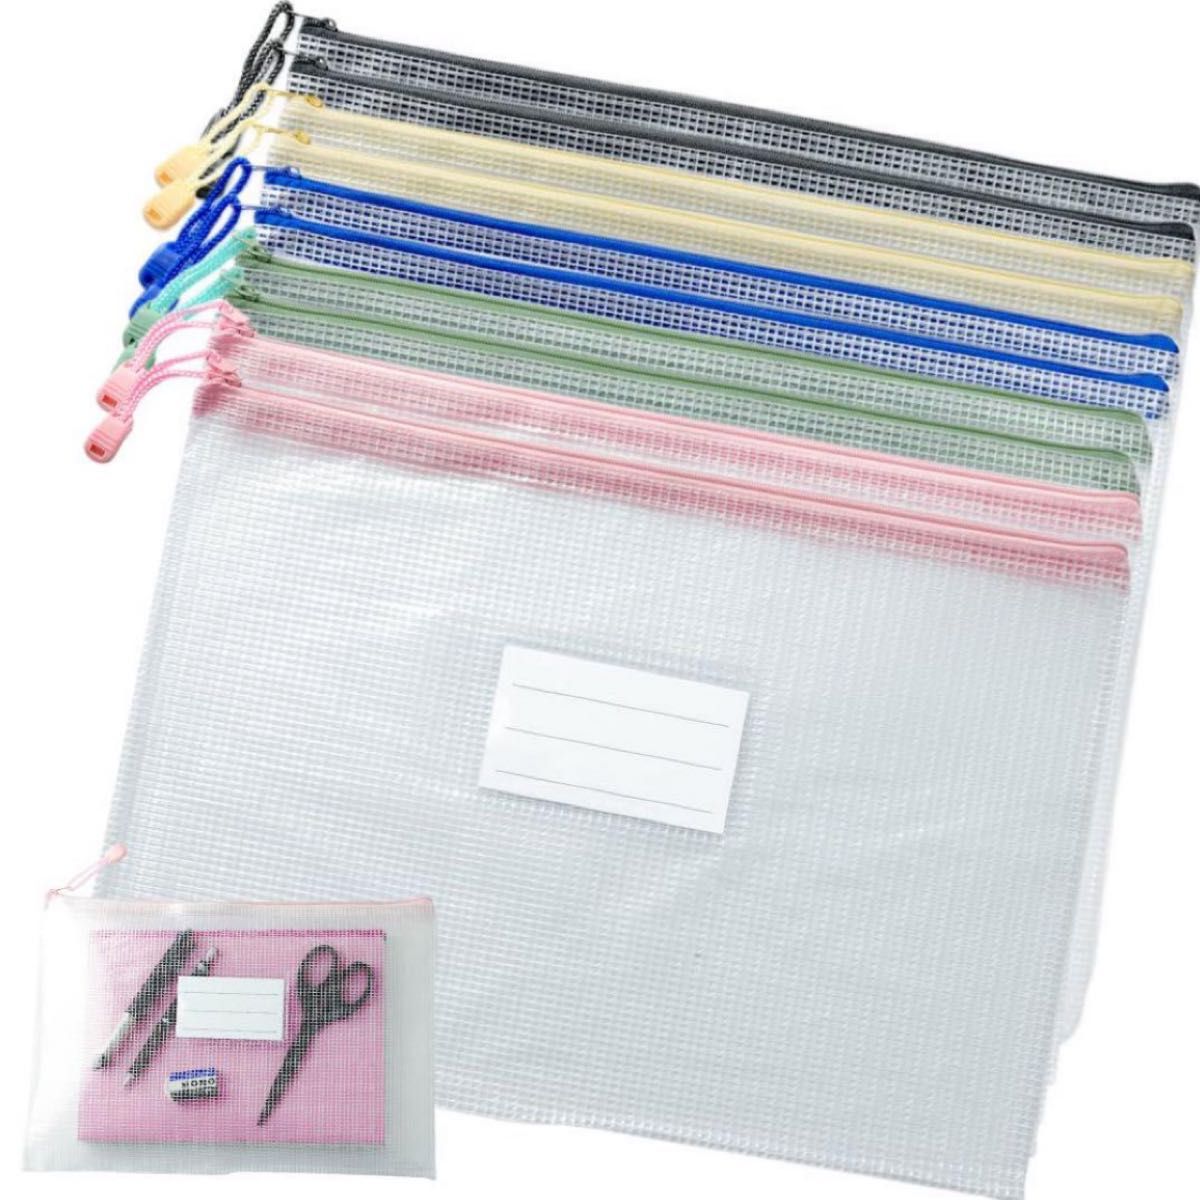 Webirth ジッパー式収納袋 防水ドキュメントポーチ 旅行用品 化粧品 書類 整理収納 収納袋(A5 マルチカラー10枚)